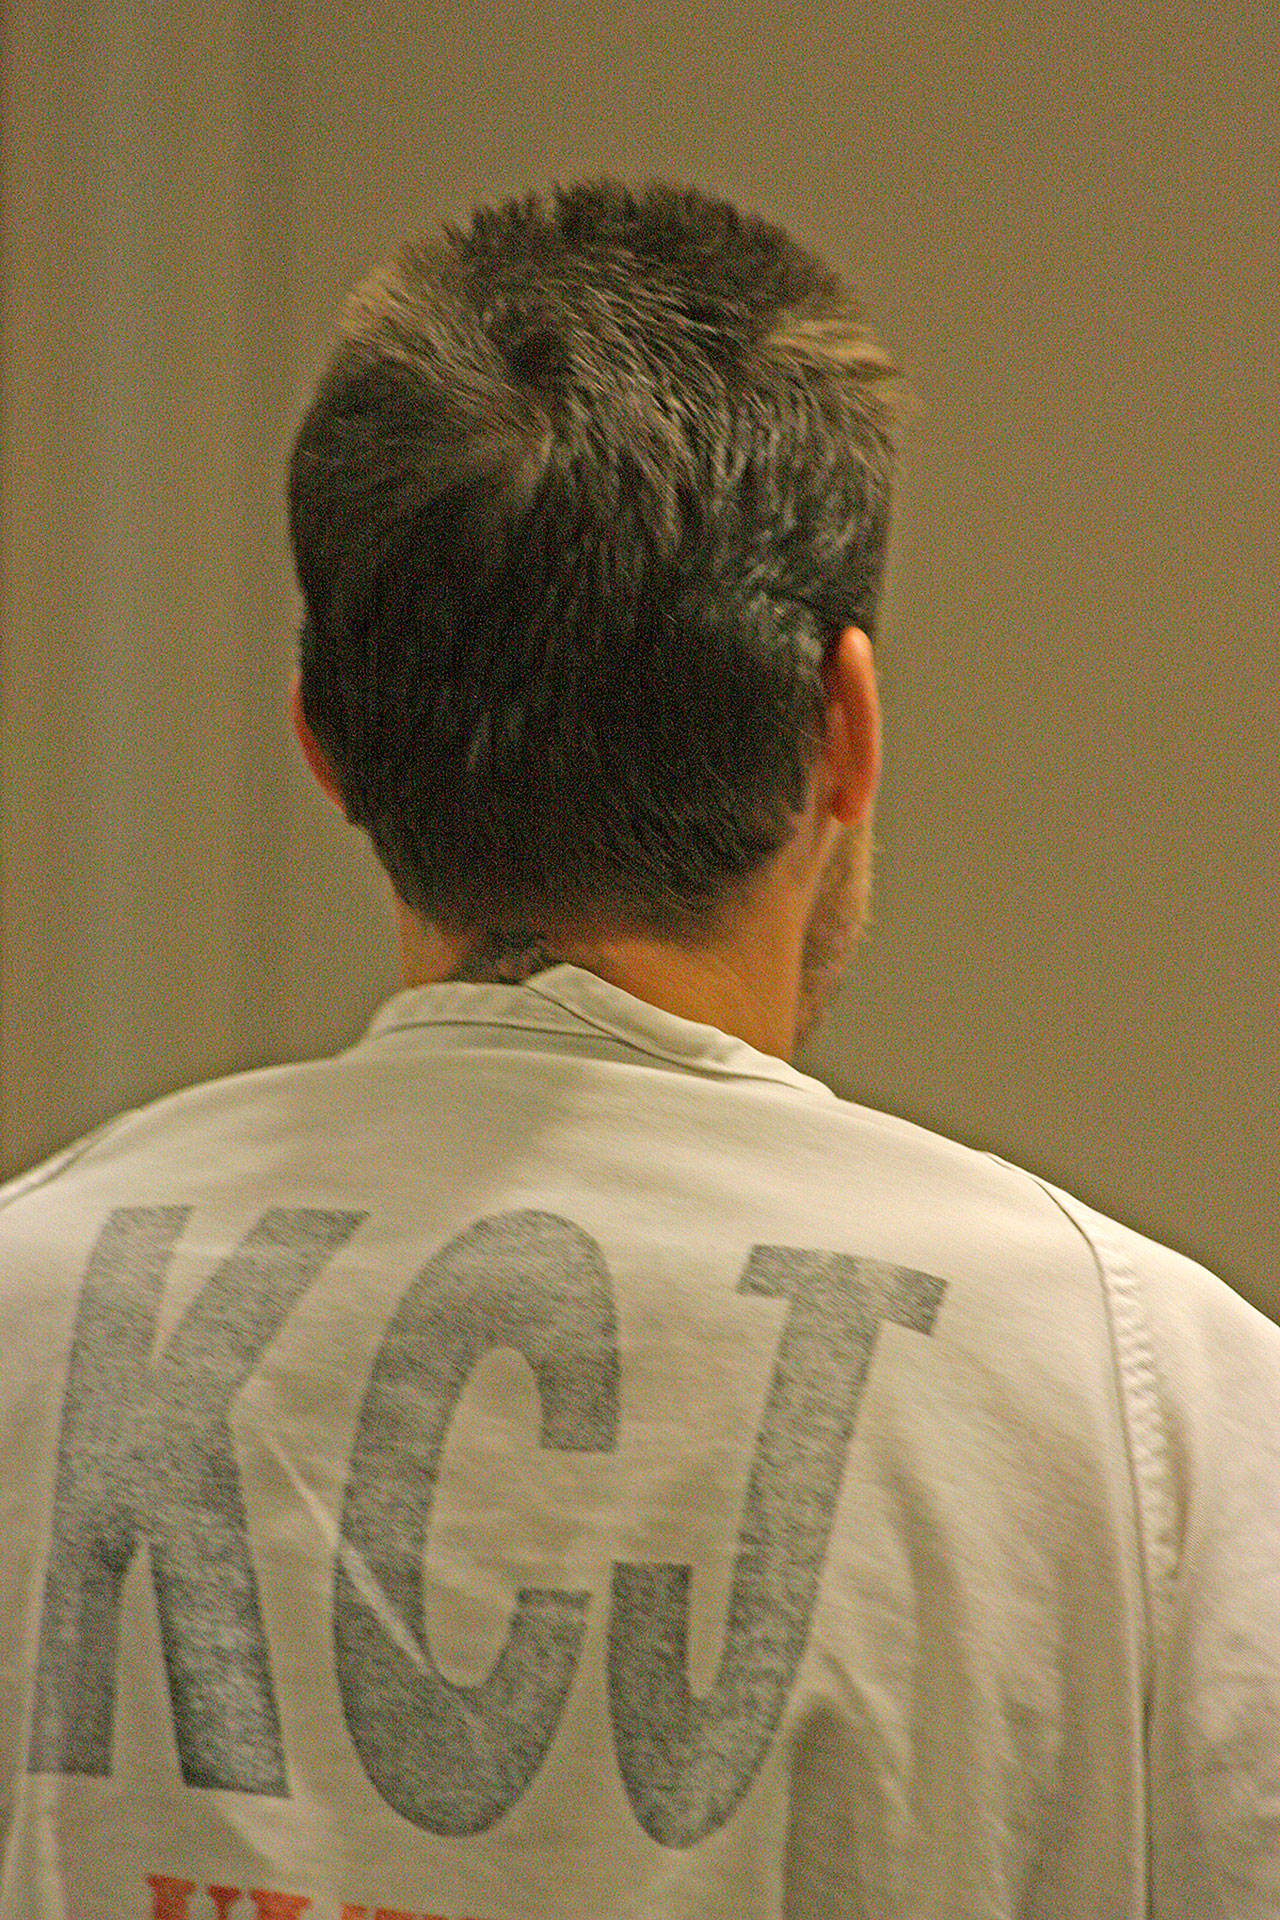 Brett Barney pleads not guilty Monday to second-degree assault of a Kent Police officer. MARK KLAAS, Kent Reporter